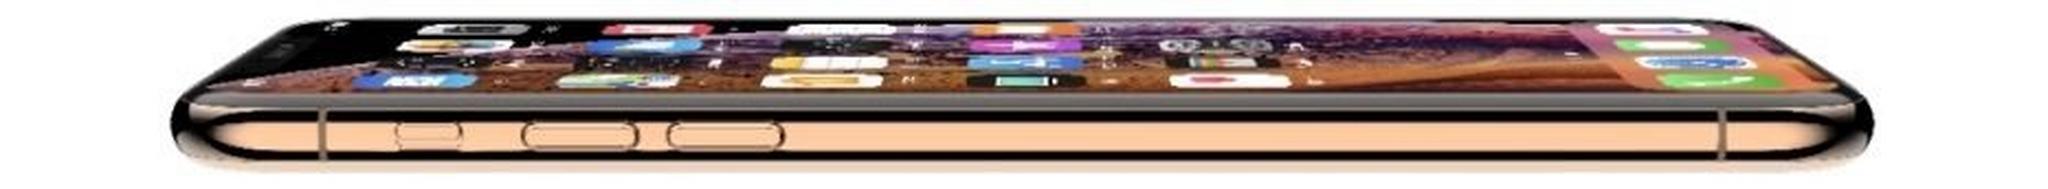 Belkin ScreenForce InvisiGlass Ultra Screen Protection for iPhone XR - F8W900EC